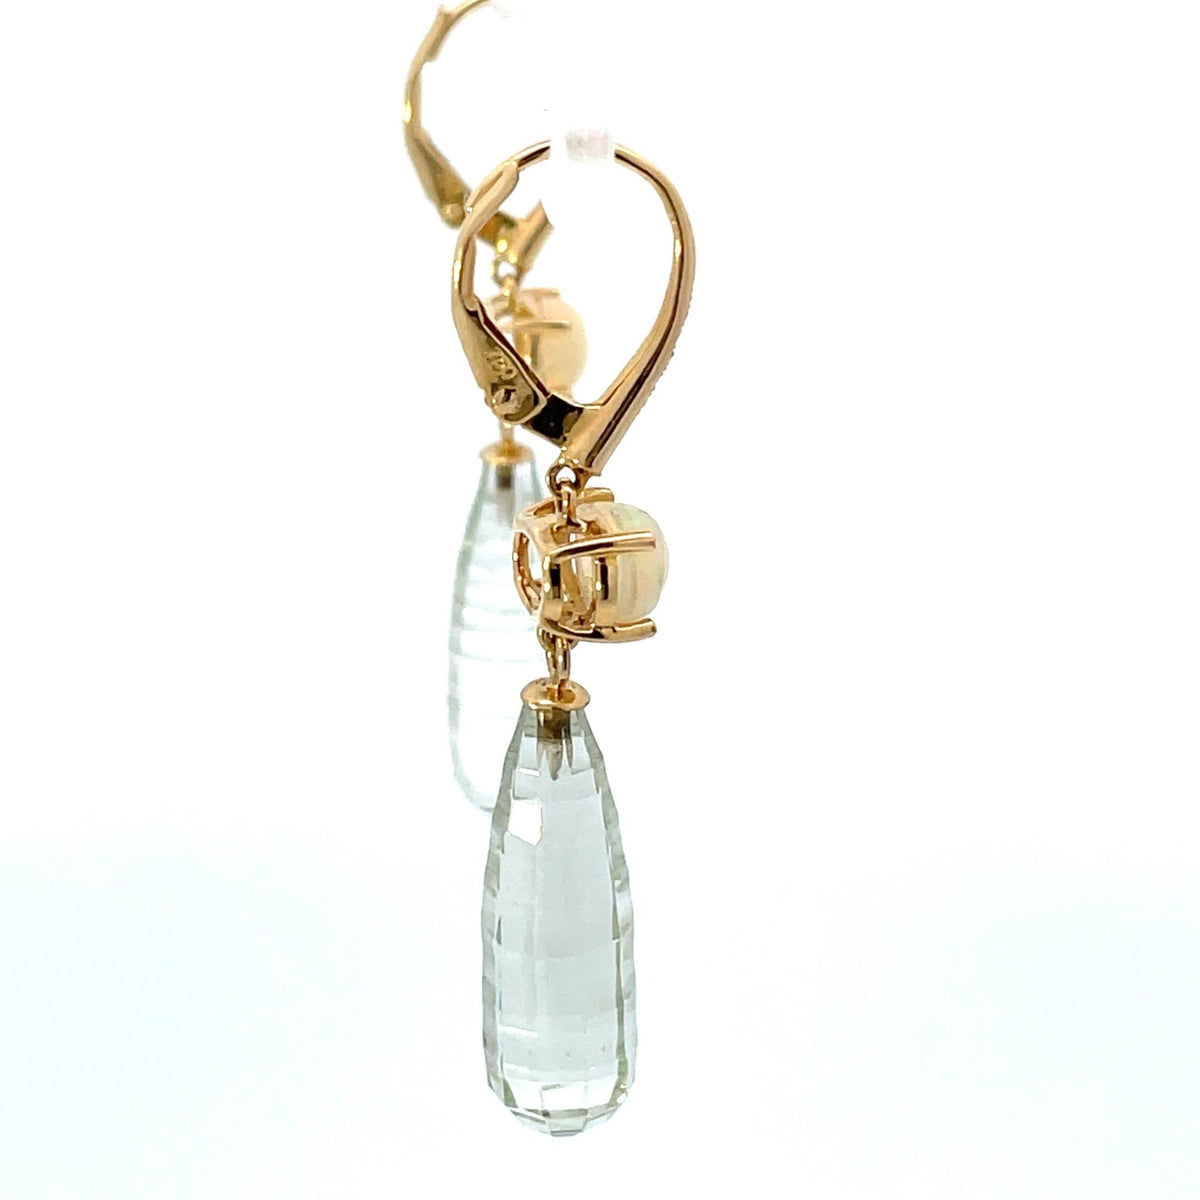 Longline Green Amethyst and White Opal and diamond earrings - Markbridge Jewellers